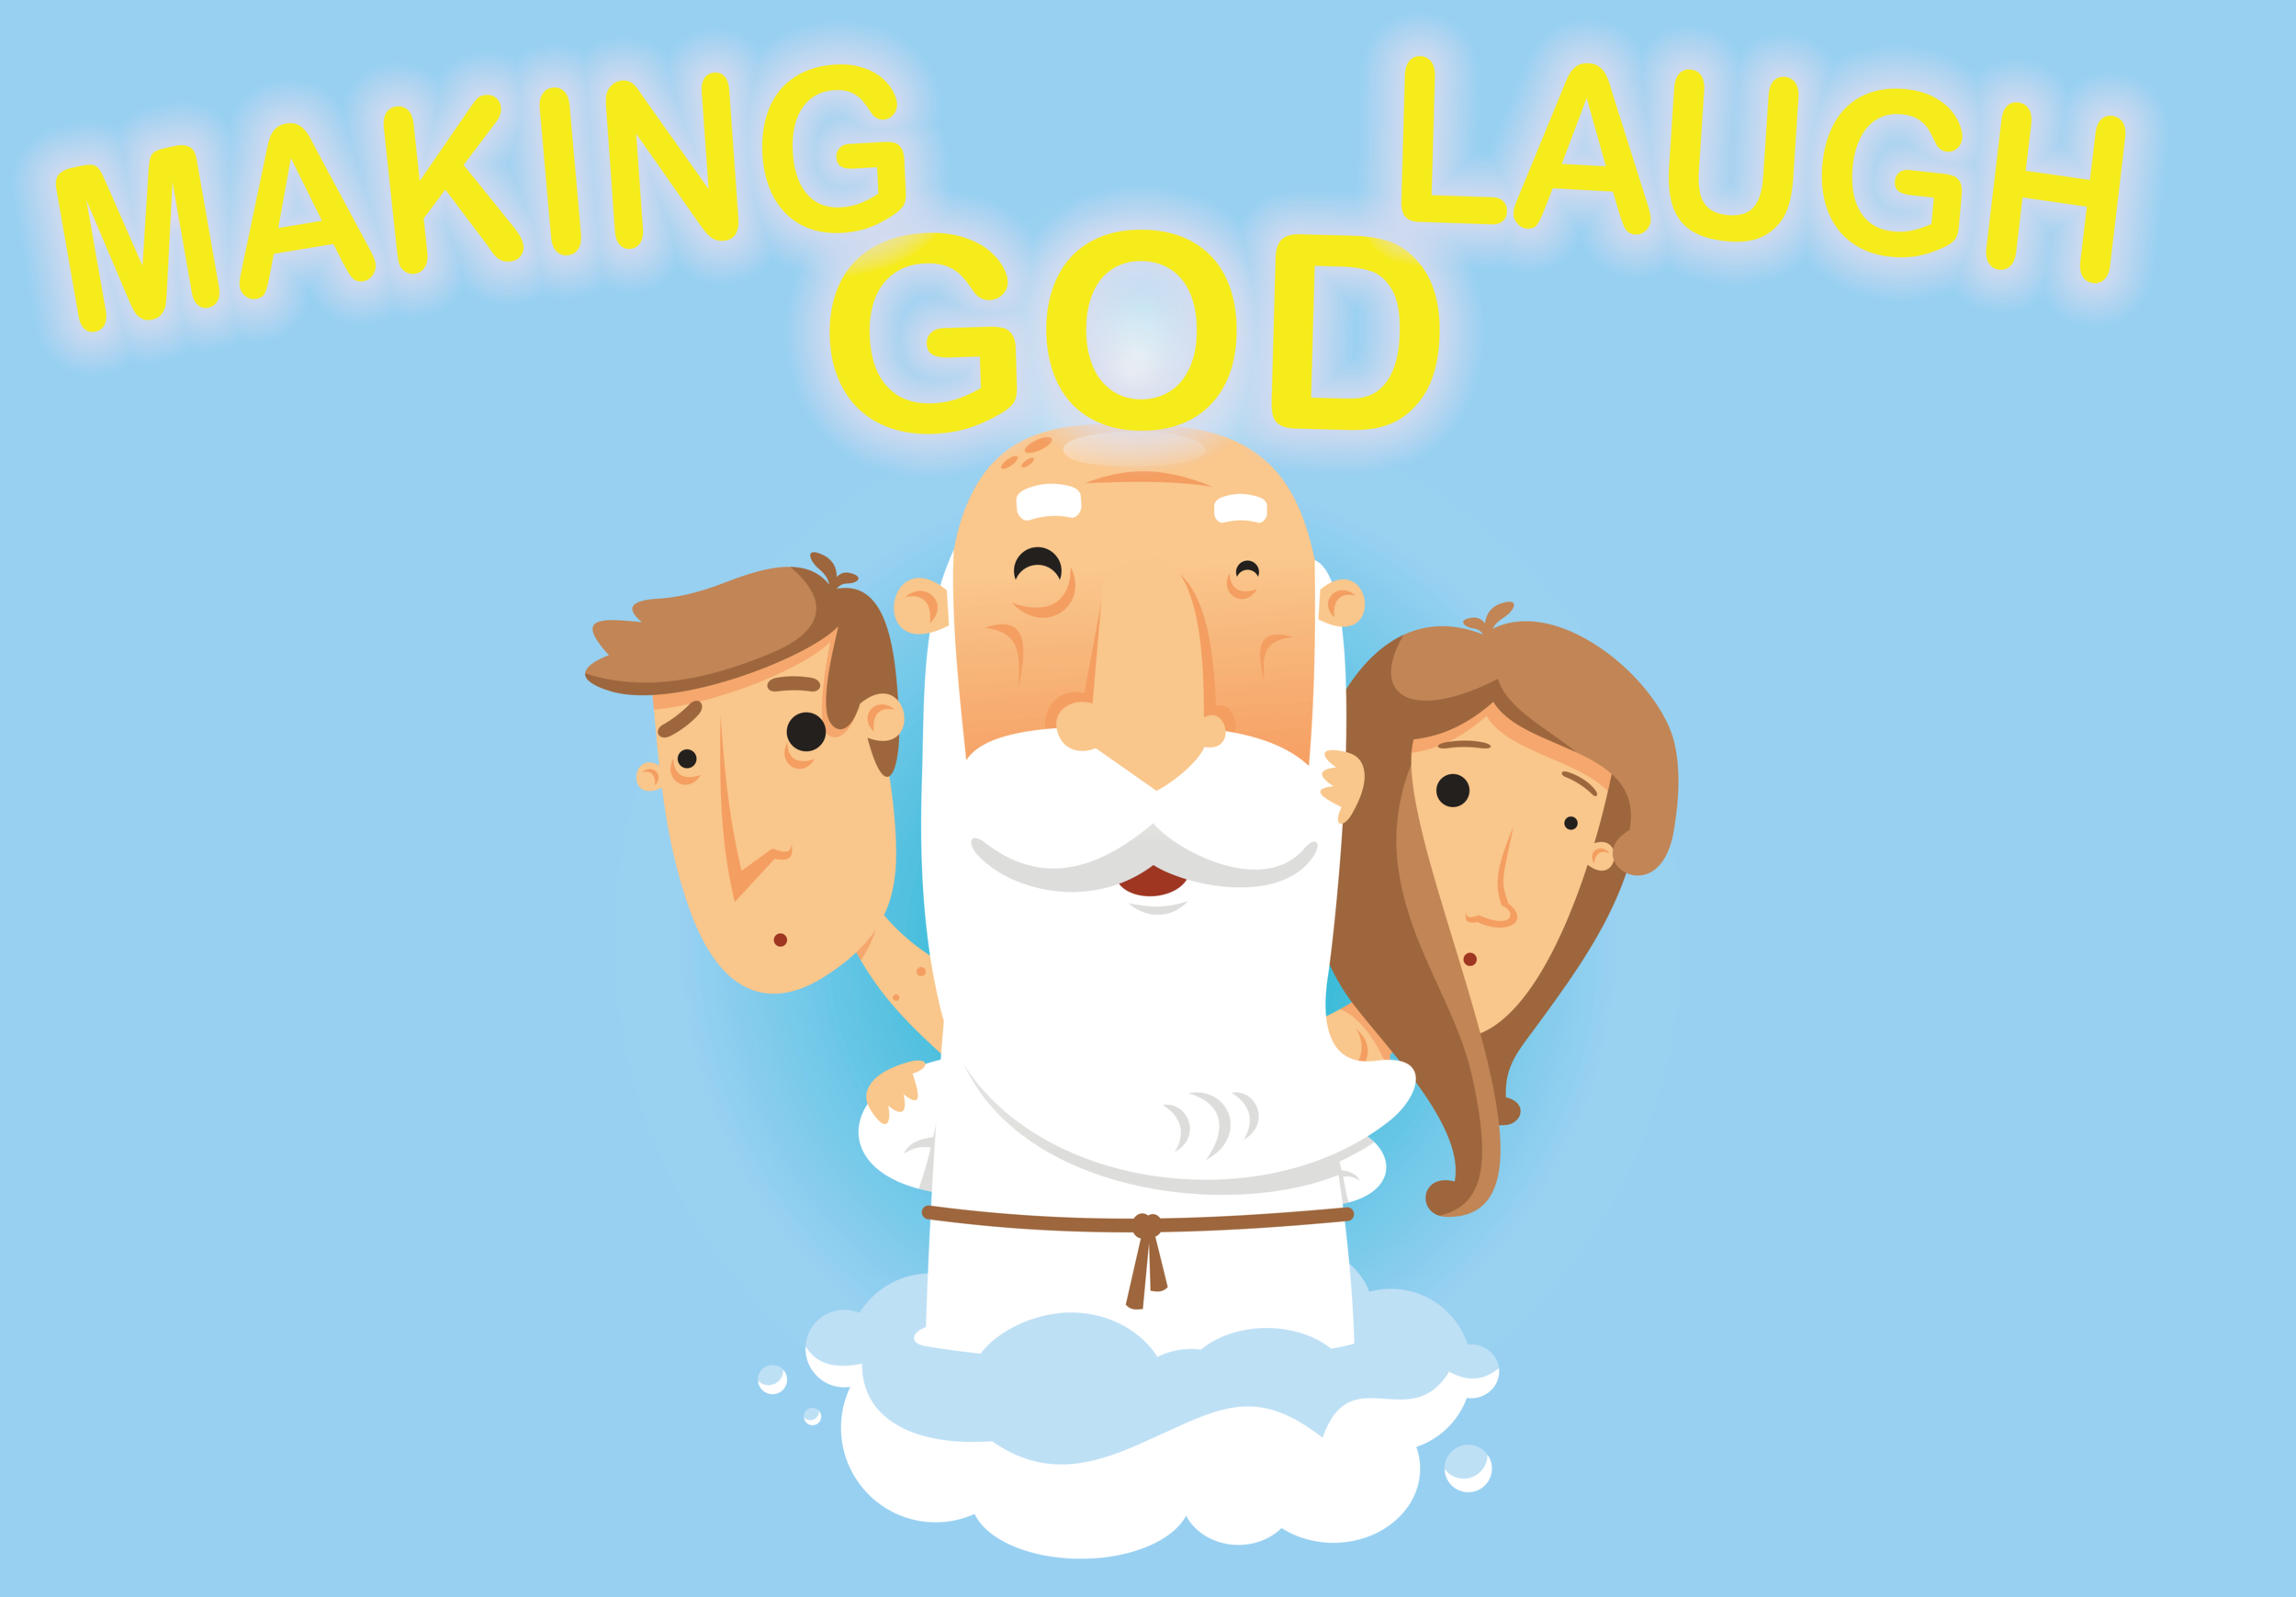 making god laugh.png